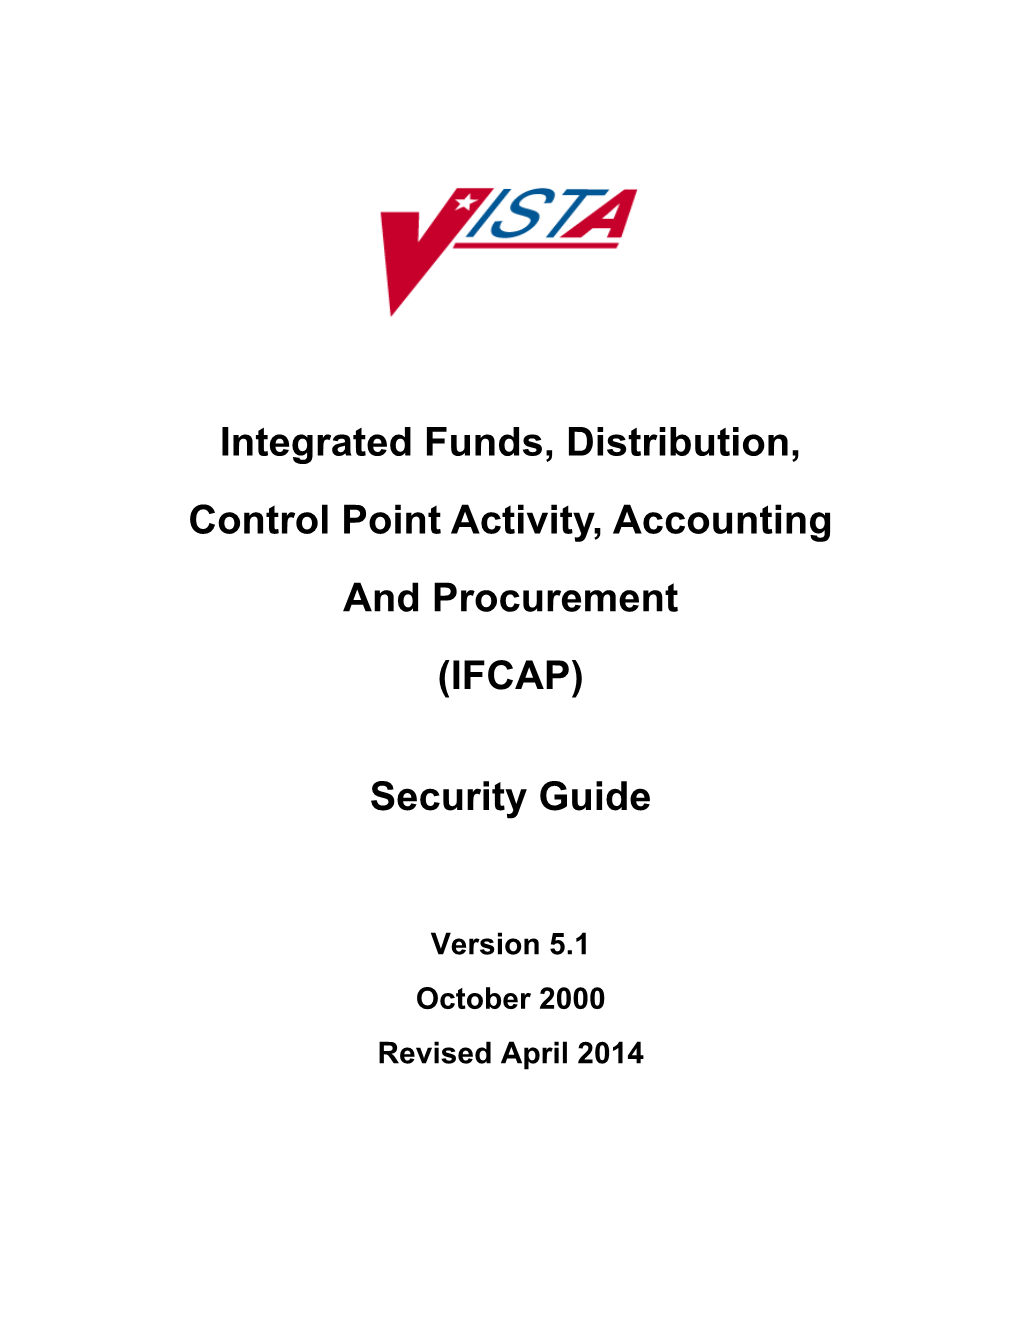 IFCAP V. 5.1 Security Guide